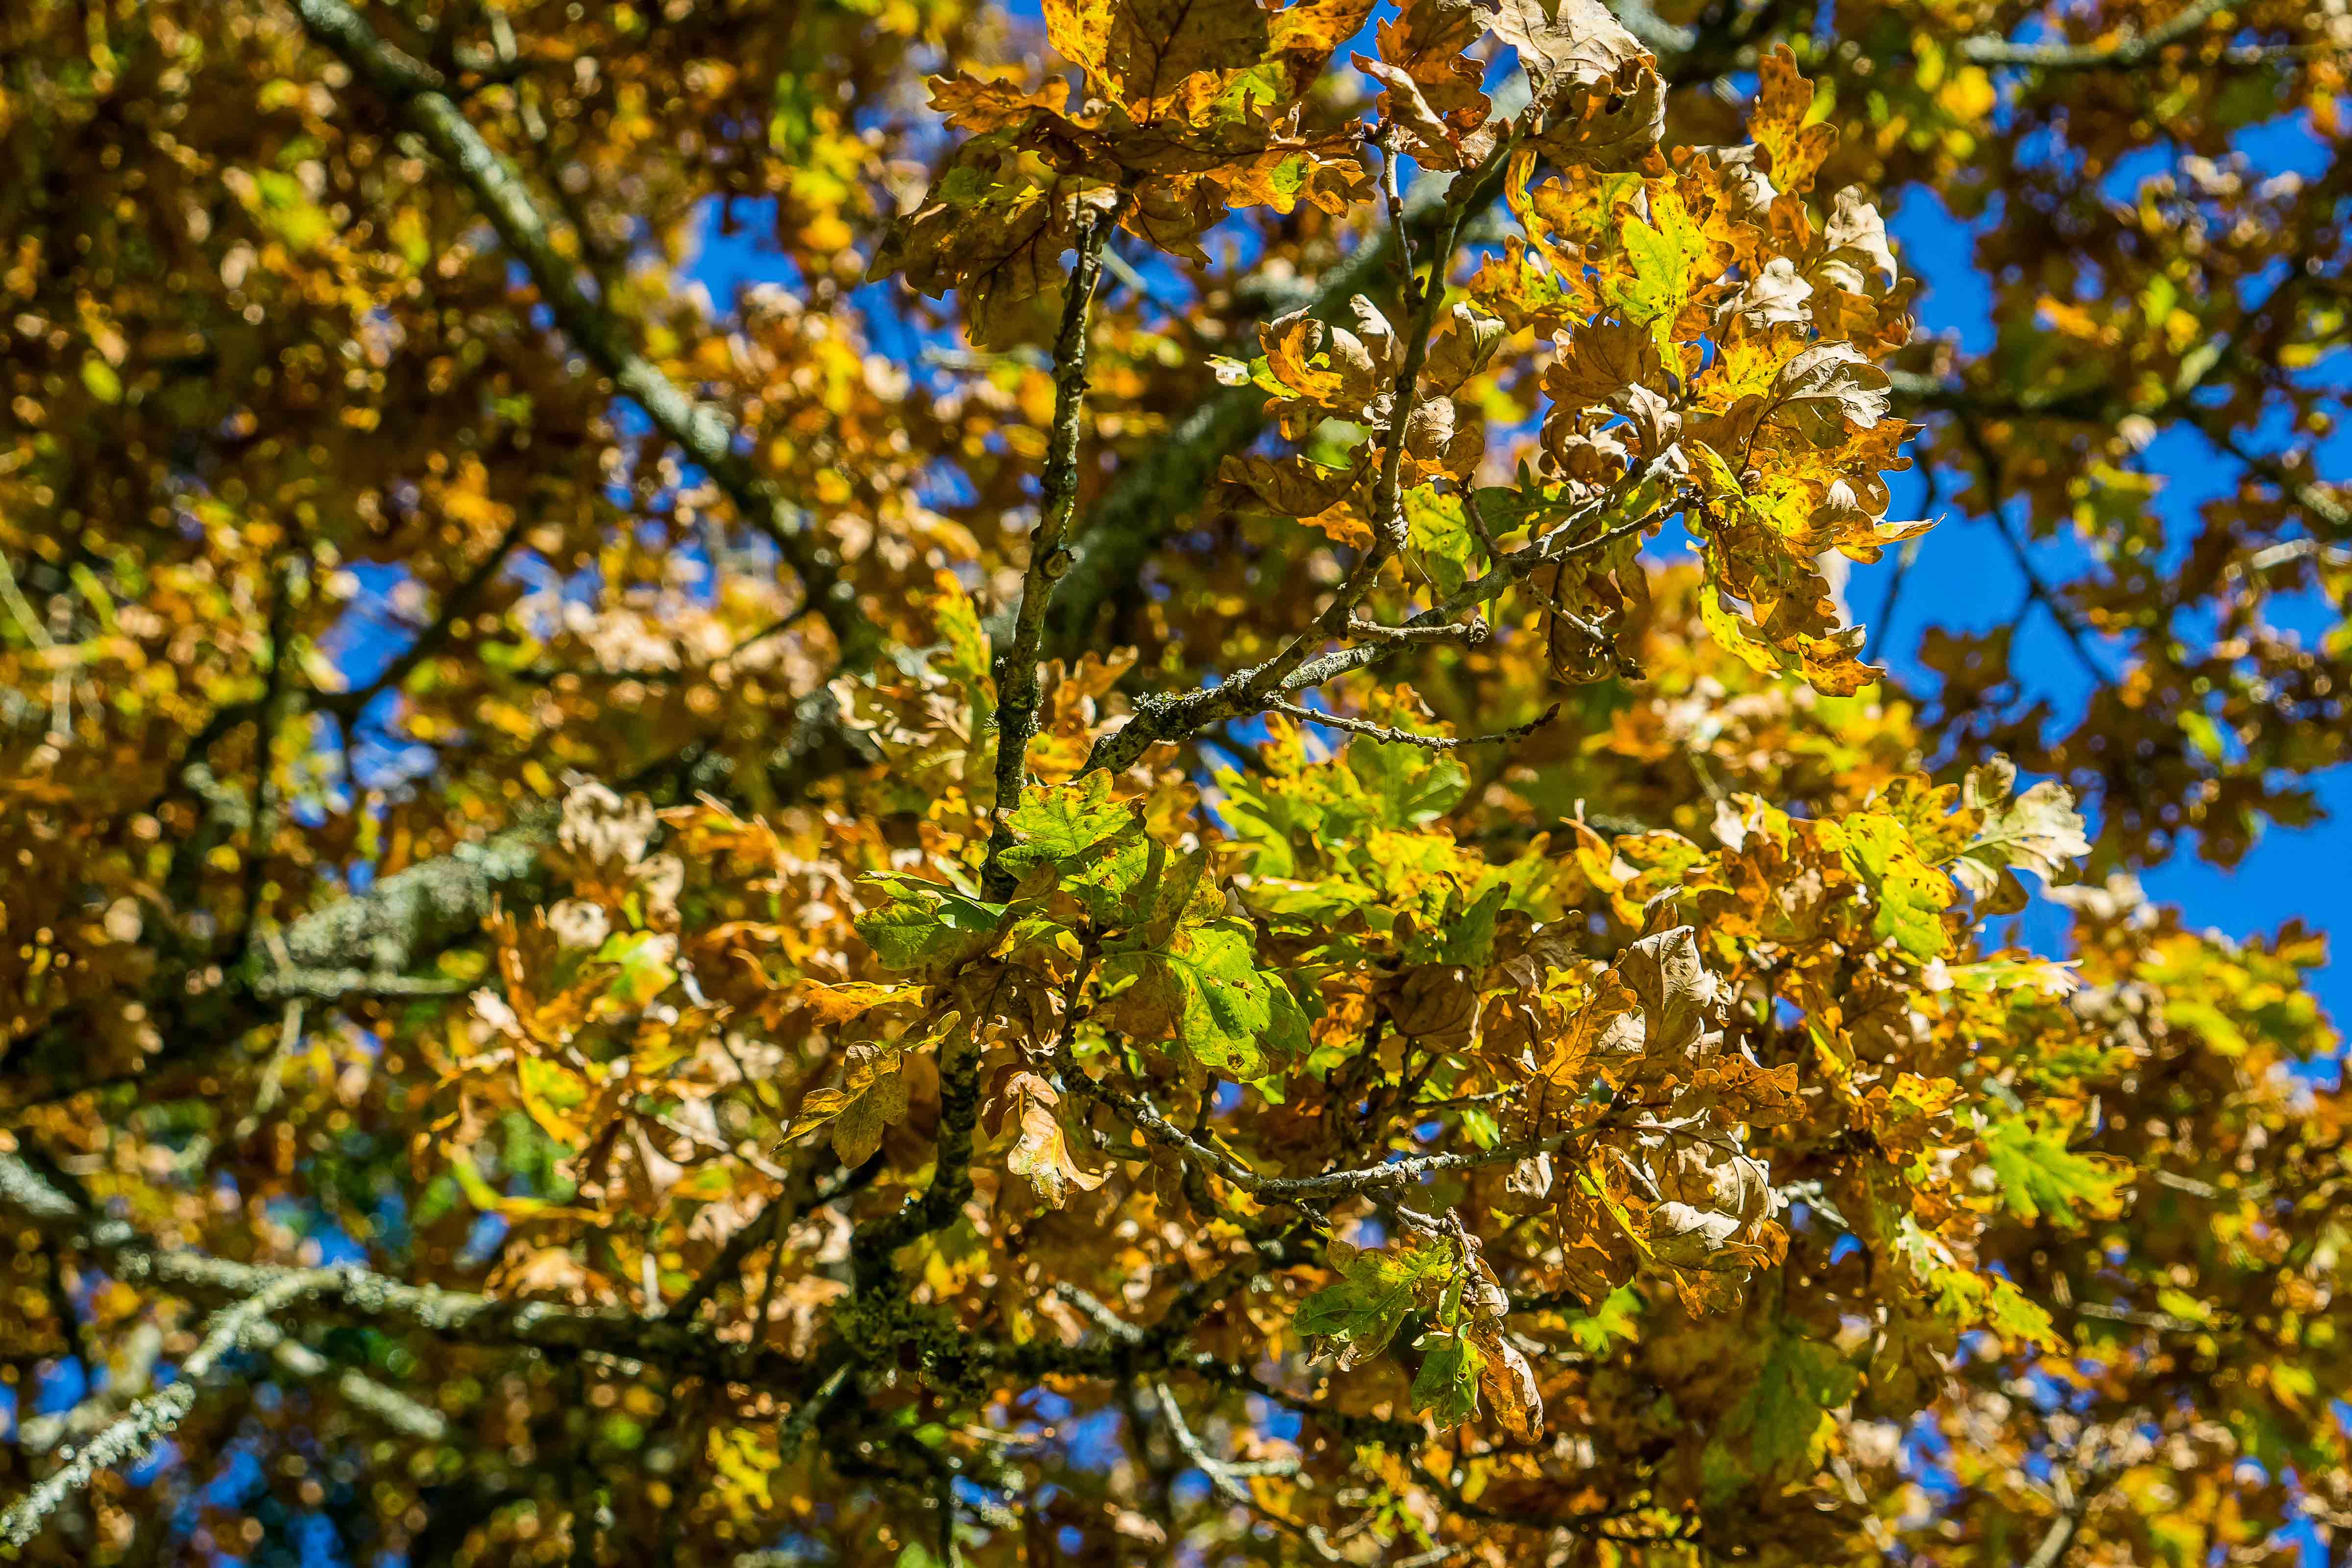 Brown leaves on oak tree in autumn